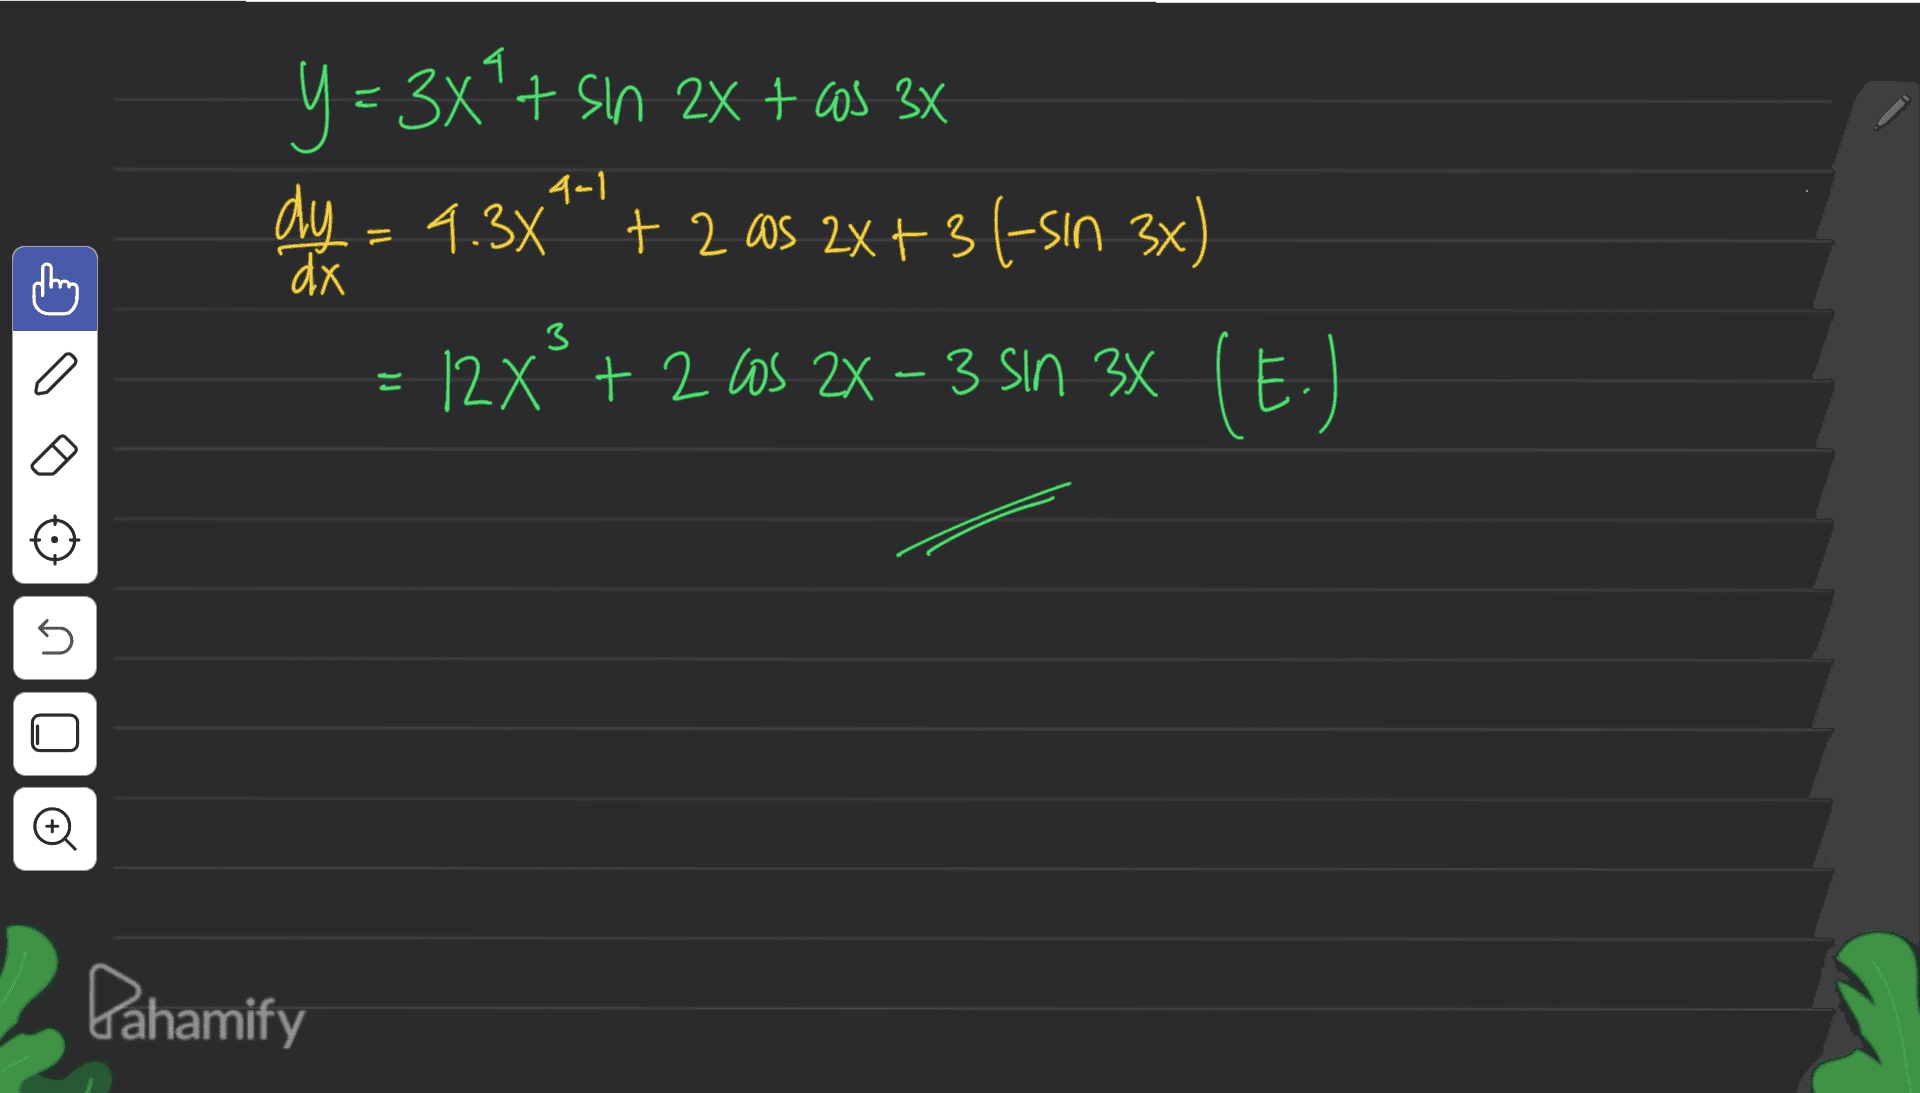 4. 9-1 Y = 3x'+ sin 2x + cas 3X 2x dy = 4.3X + 2 as 25+3/-sin 3x) 2 2x+36 = 12xº + 2 CS 2X – 3 Sin 3X (E.) 2 3 2 los 2X-3 dx 3 n U Pahamify 